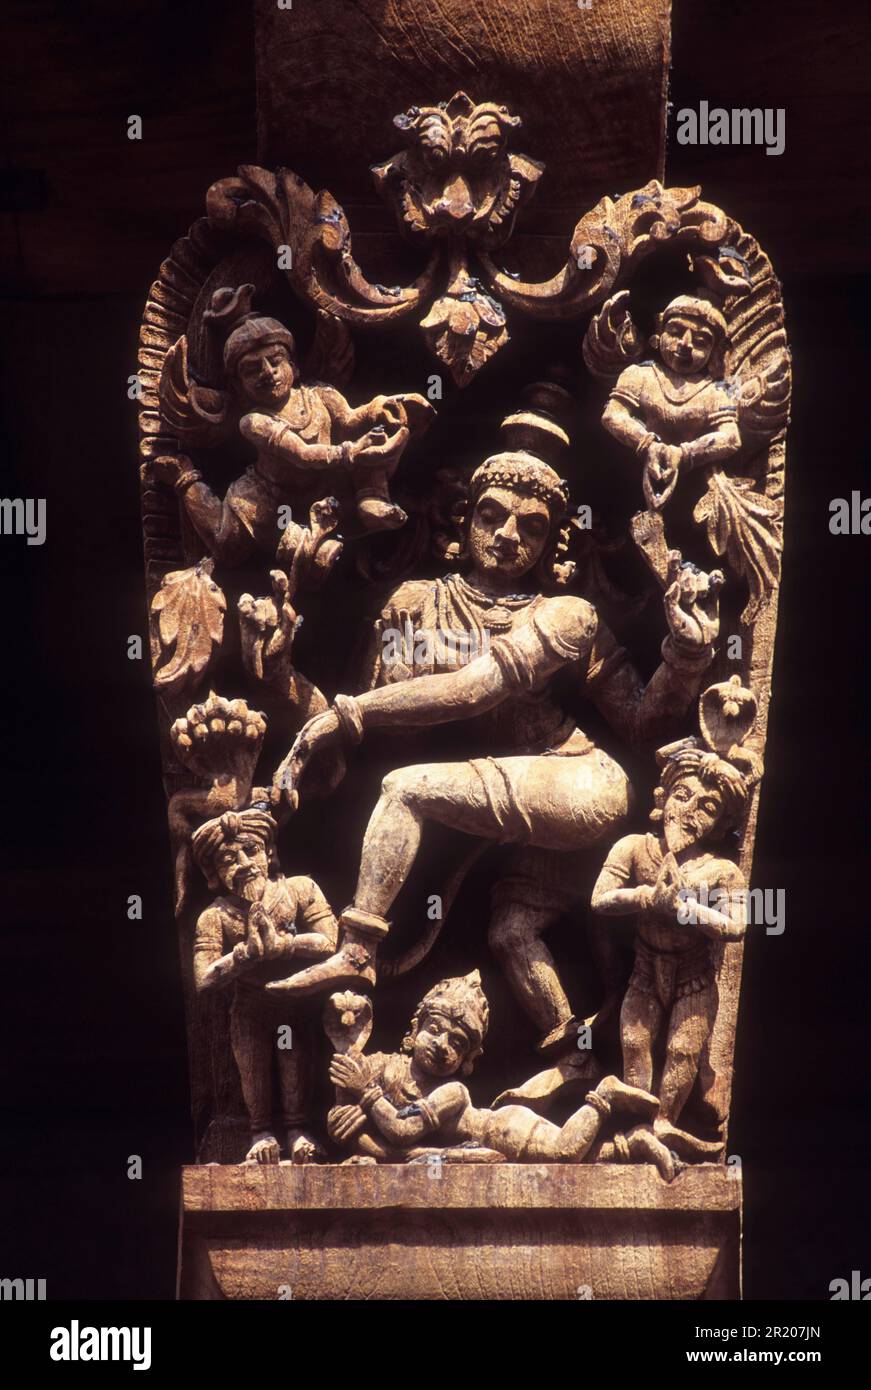 Loard Nataraja, 17th century wooden carvings in Meenakshi-Sundareswarar temple Chariot at Madurai, Tamil Nadu, South India, India, Asia Stock Photo